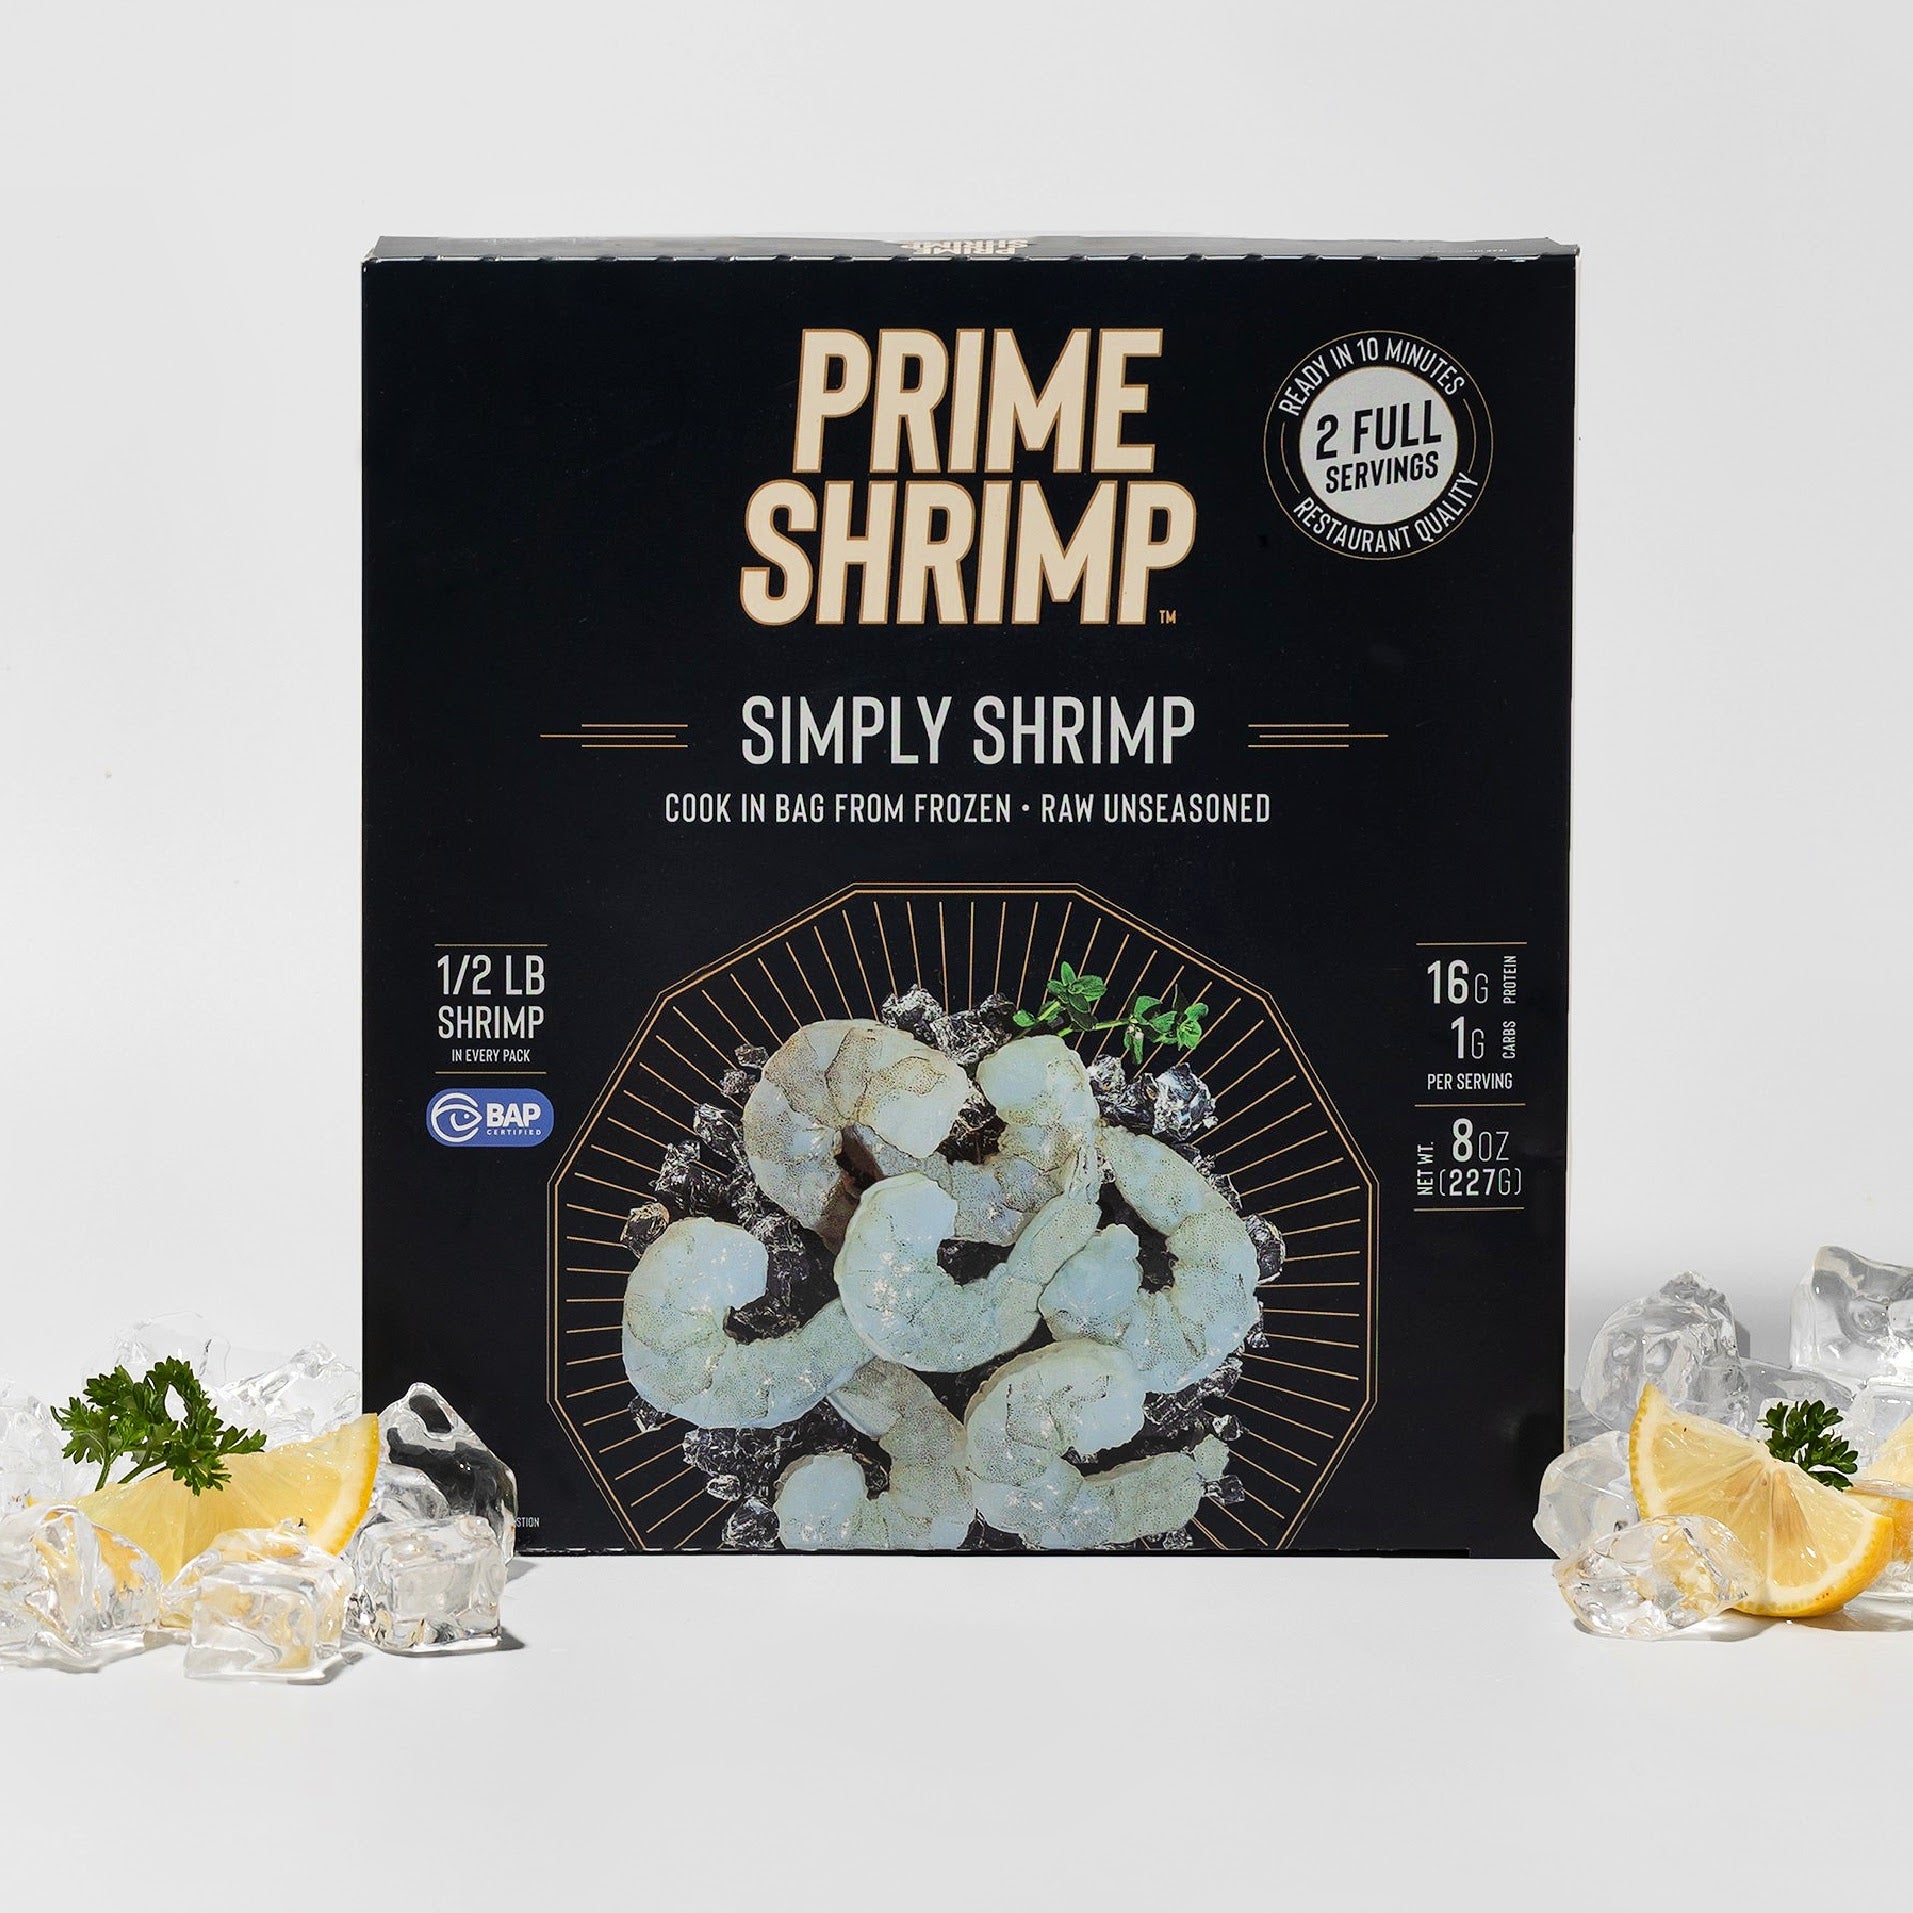 Prime-Shrimp-Simply-_-NWK-Creative-3_aaec8a10-71d4-49c2-b4d0-281a108a1e0e.jpg